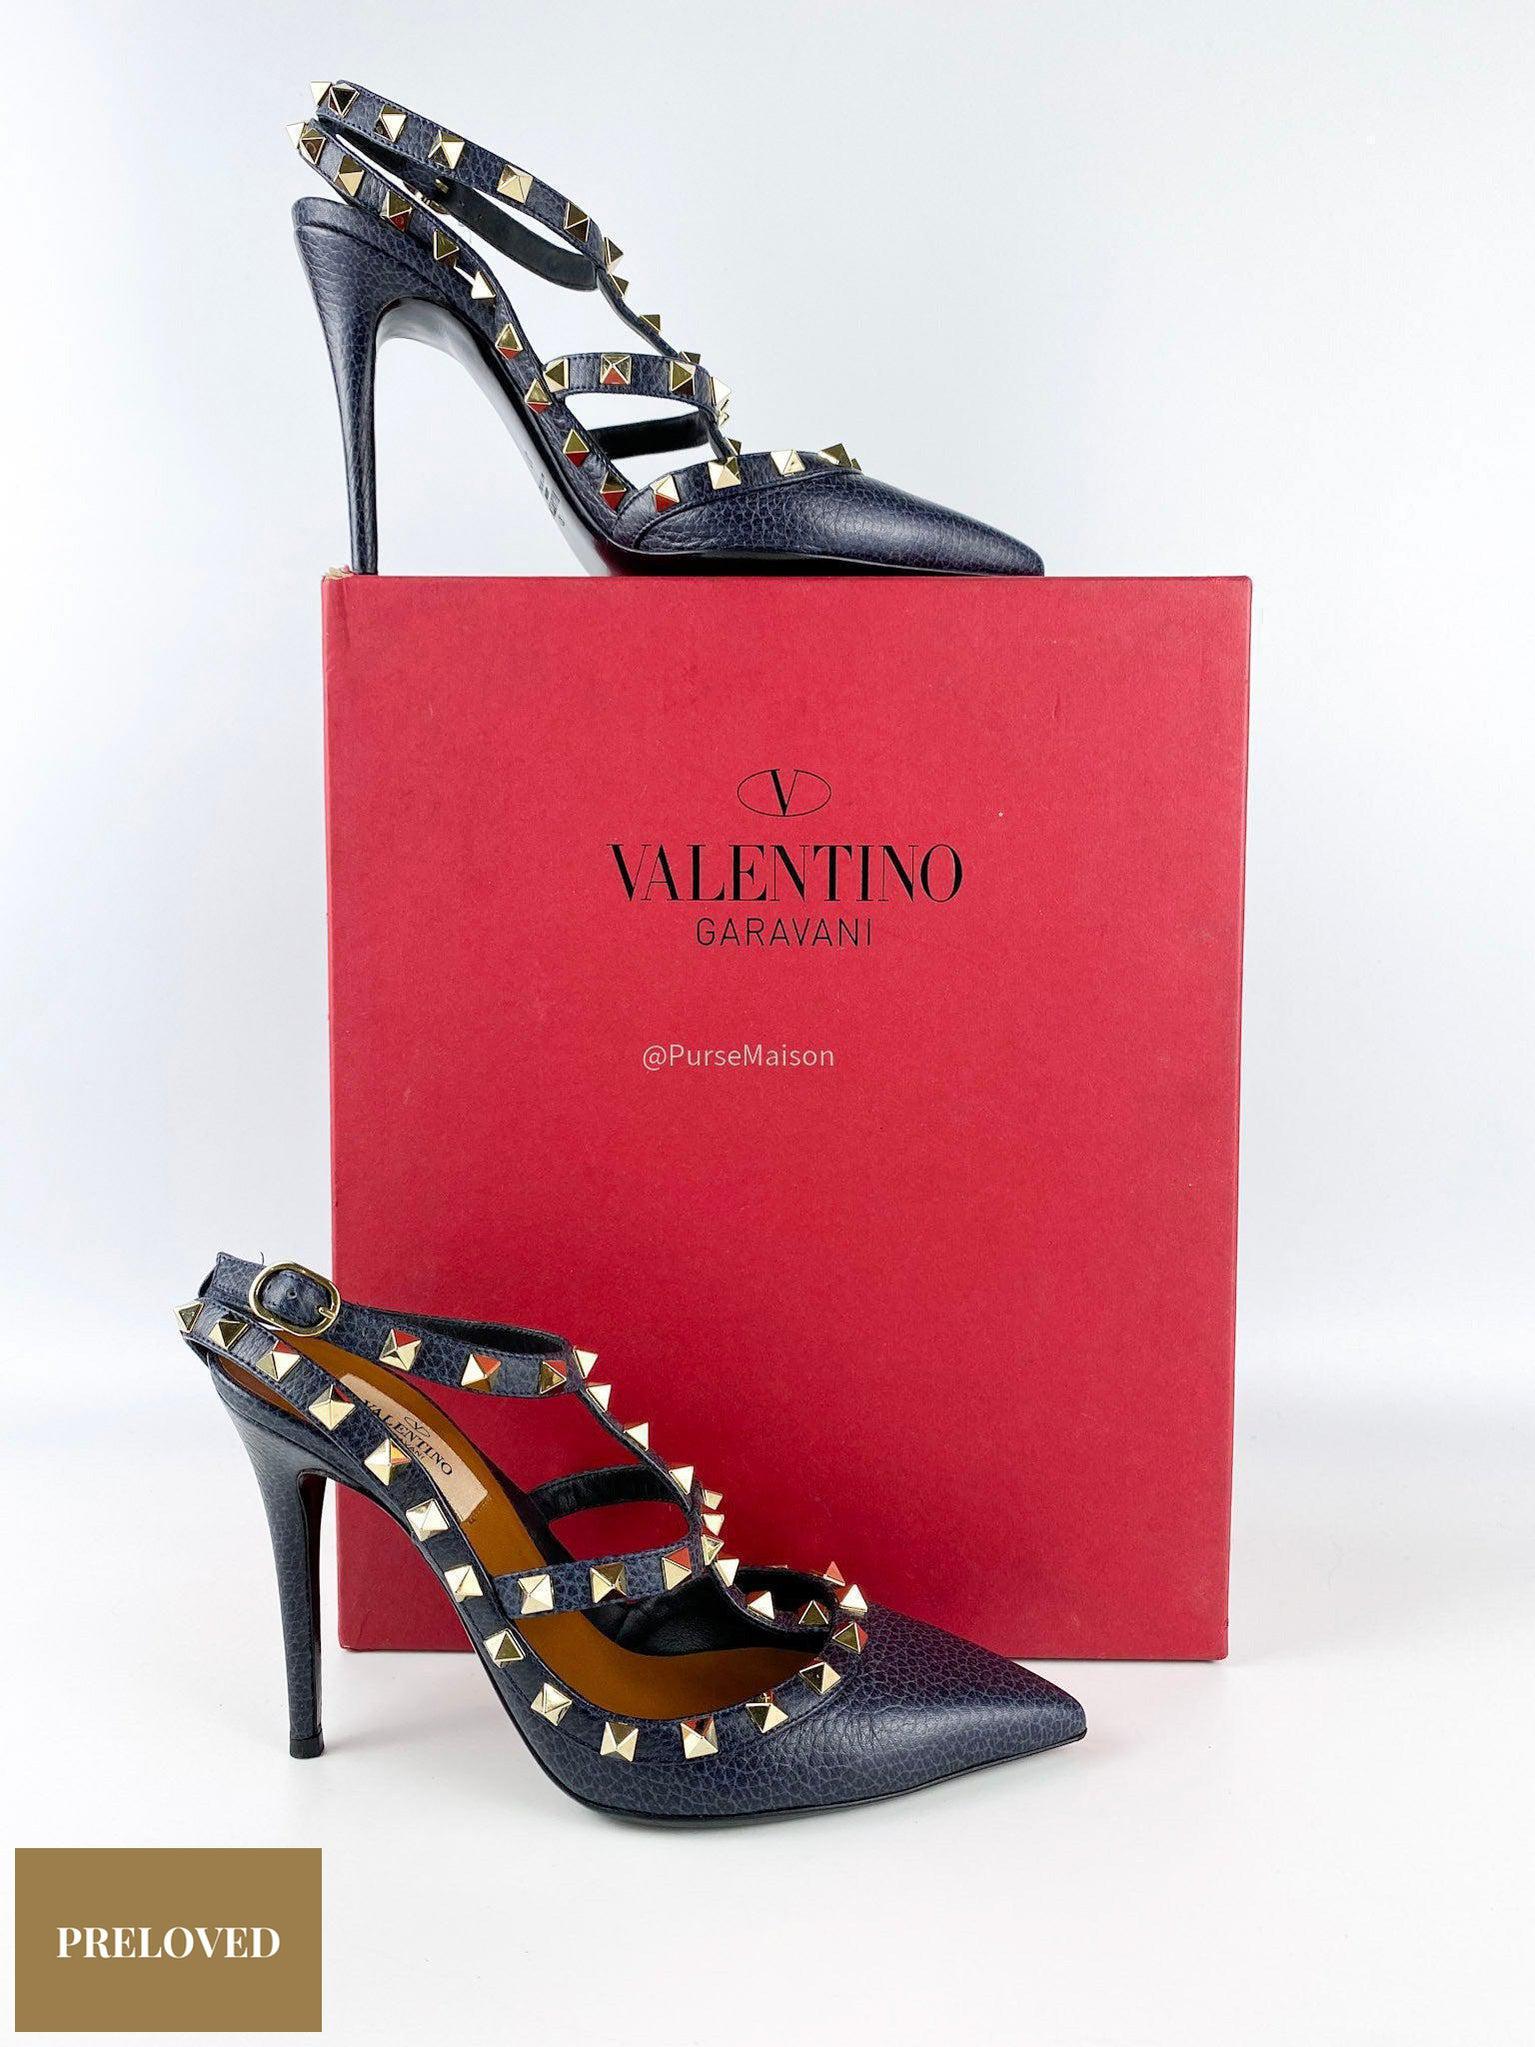 Valentino Garavani Rockstud High heels Ankle Strap size 37EU